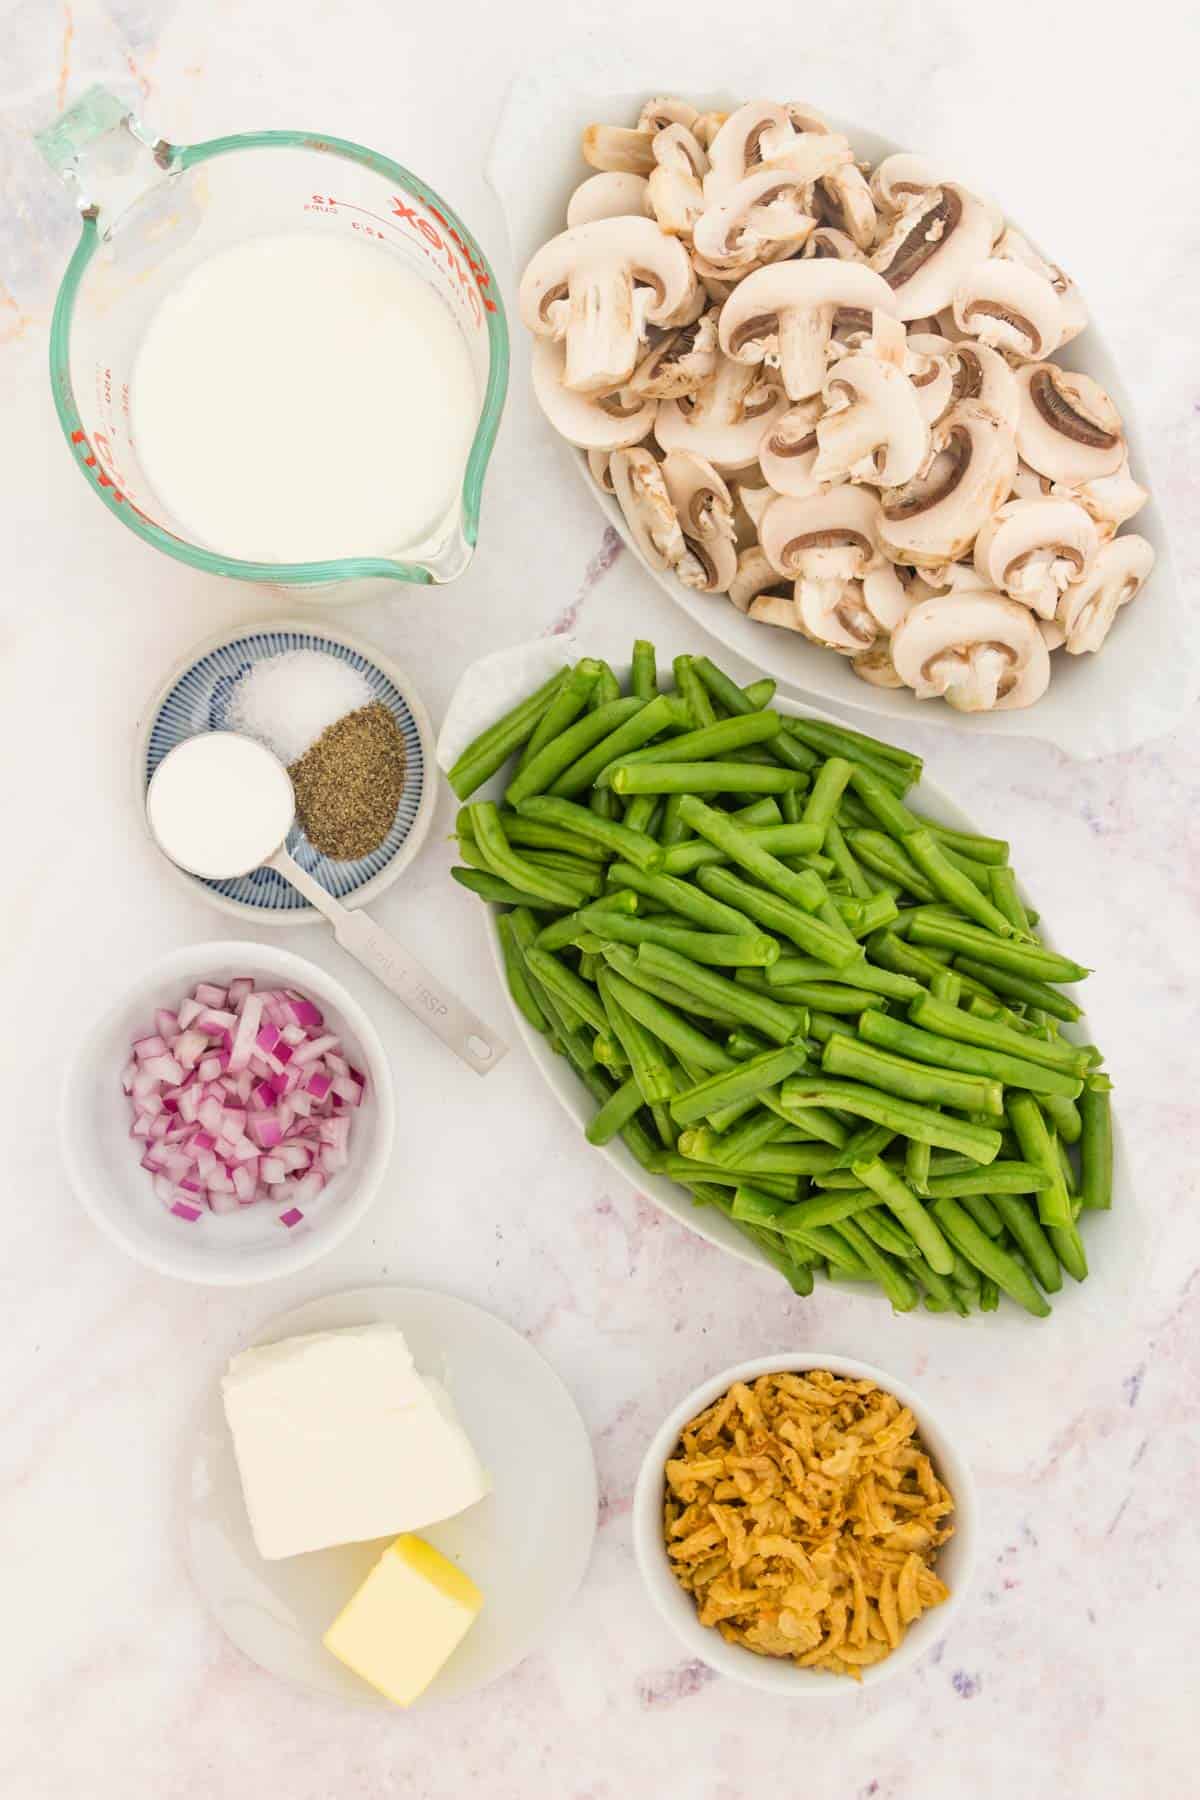 The ingredients for gluten-free green bean casserole.